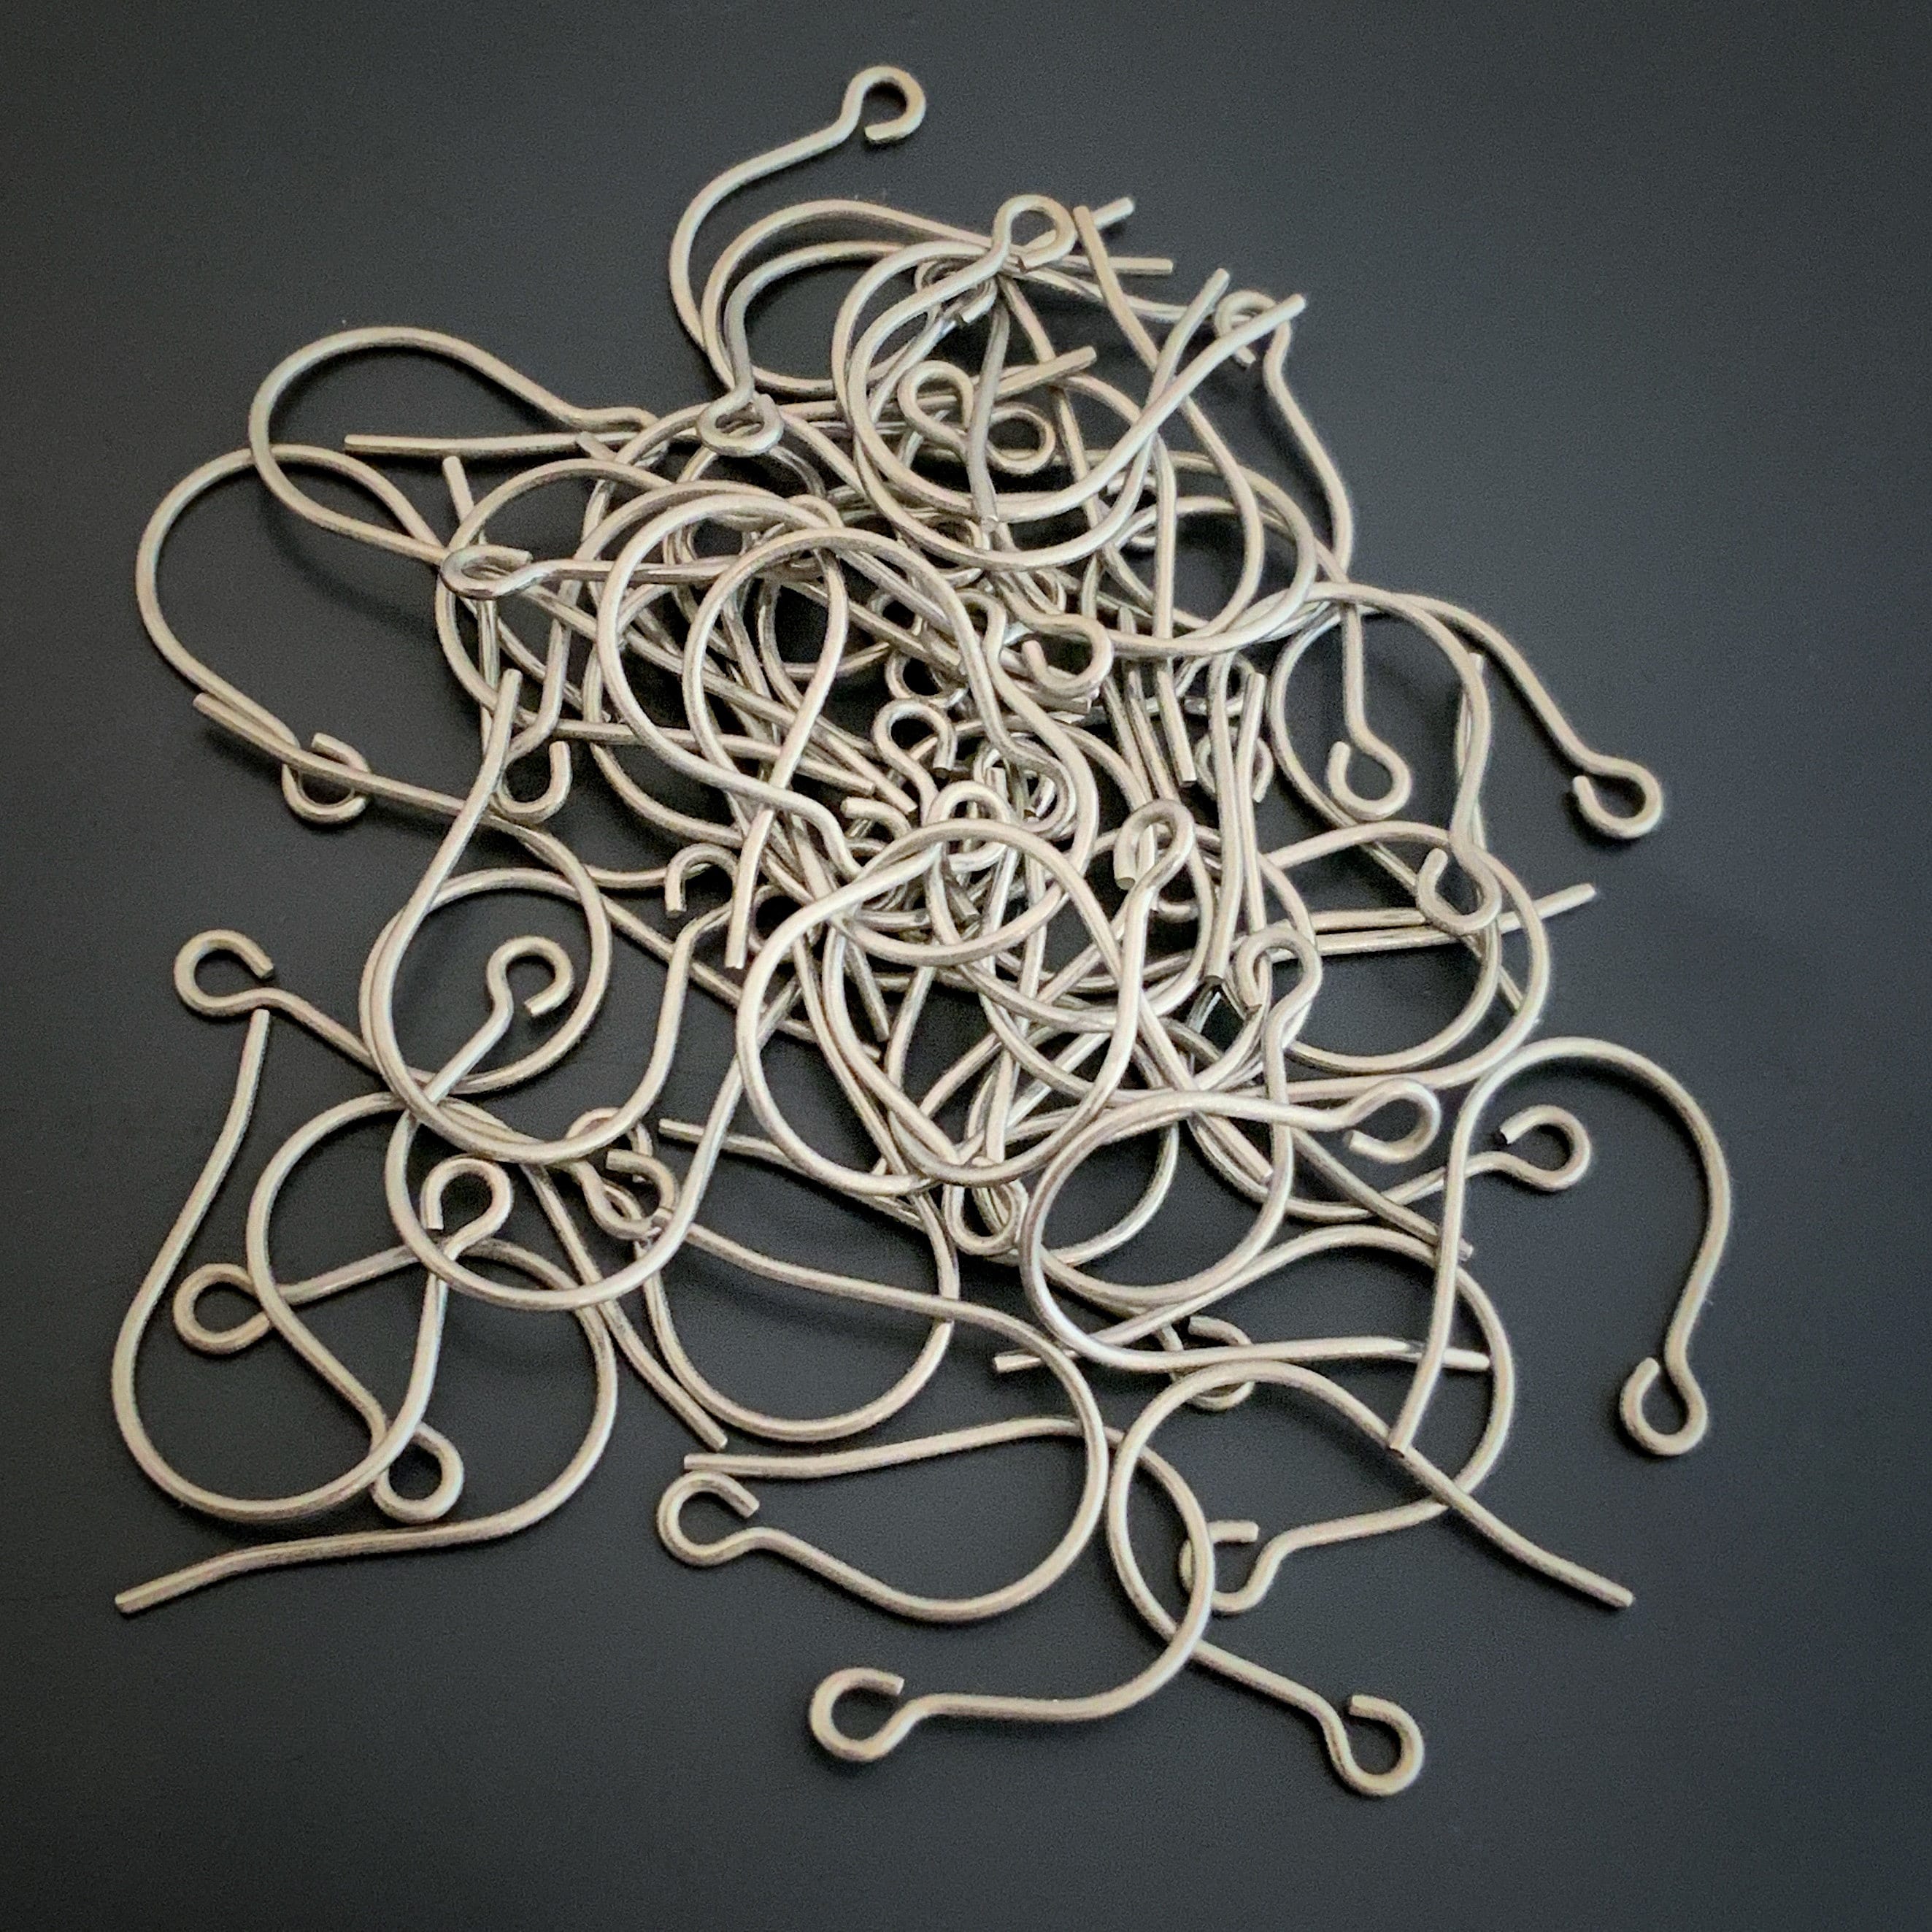 Titanium French Hook Ear Wires -  Ireland